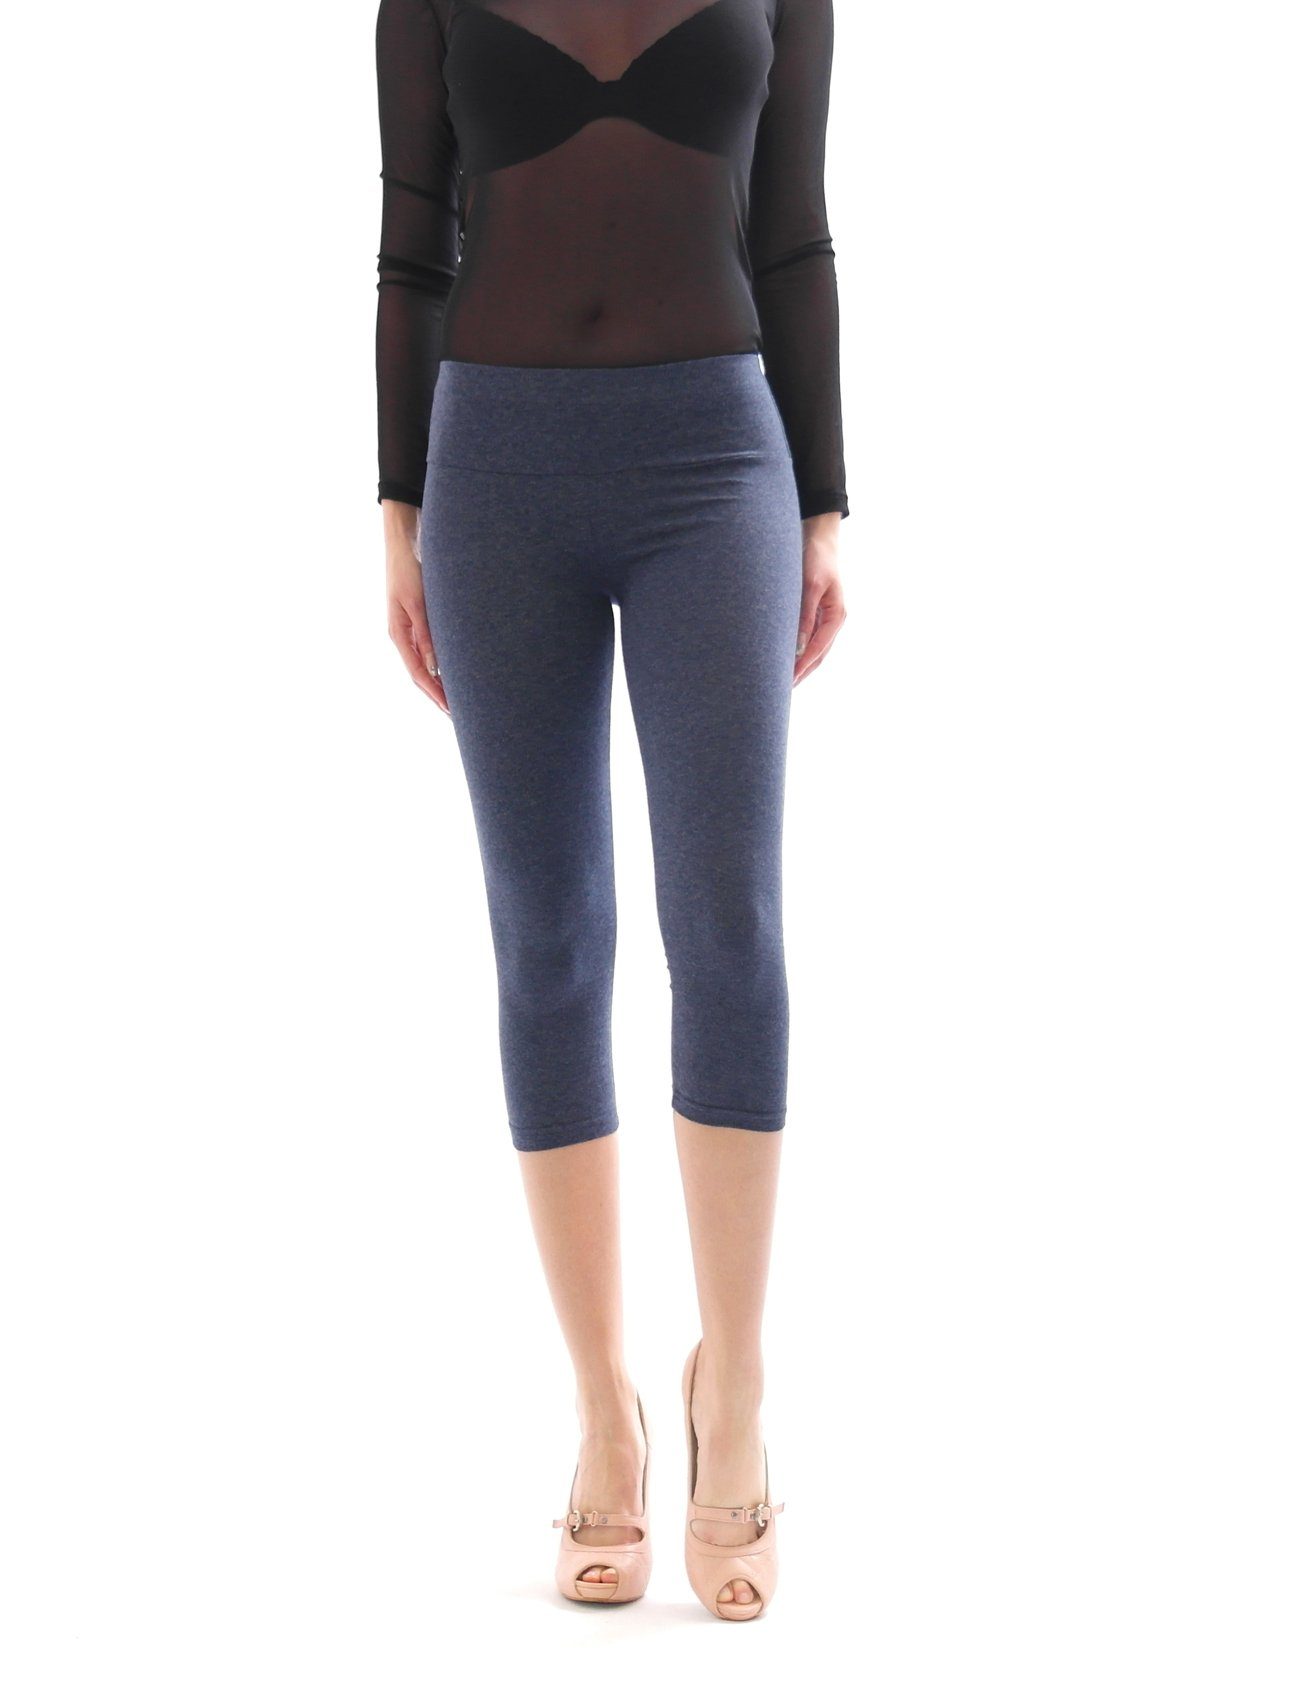 Baumwolle Hose 3/4 Caprileggings SYS mit Bund jeans Leggings hoher Capri Damen Leggins Taschen